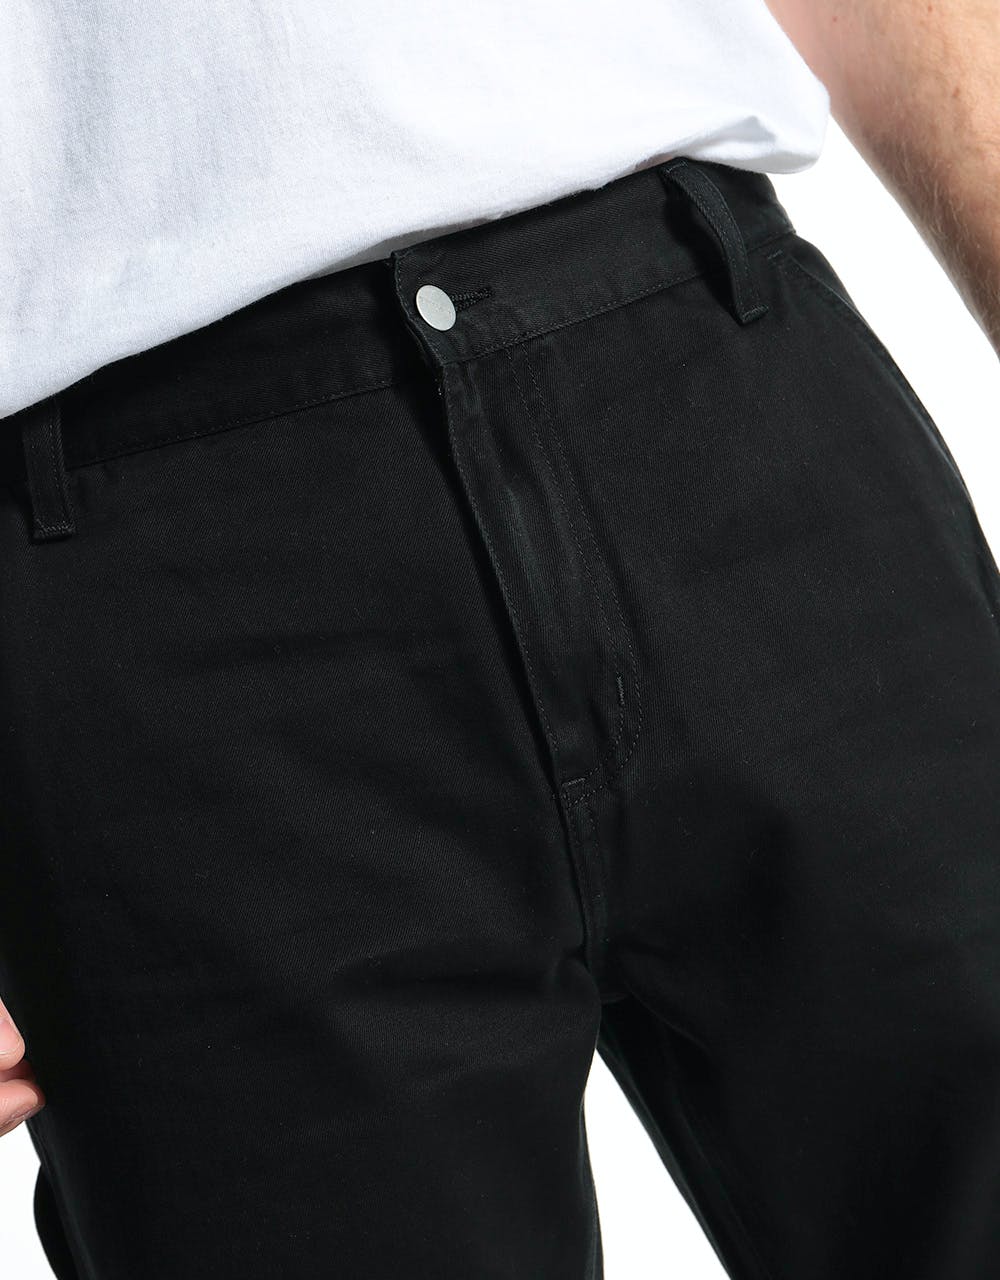 Carhartt WIP Ruck Single Knee Pant - Black (Stone Washed)